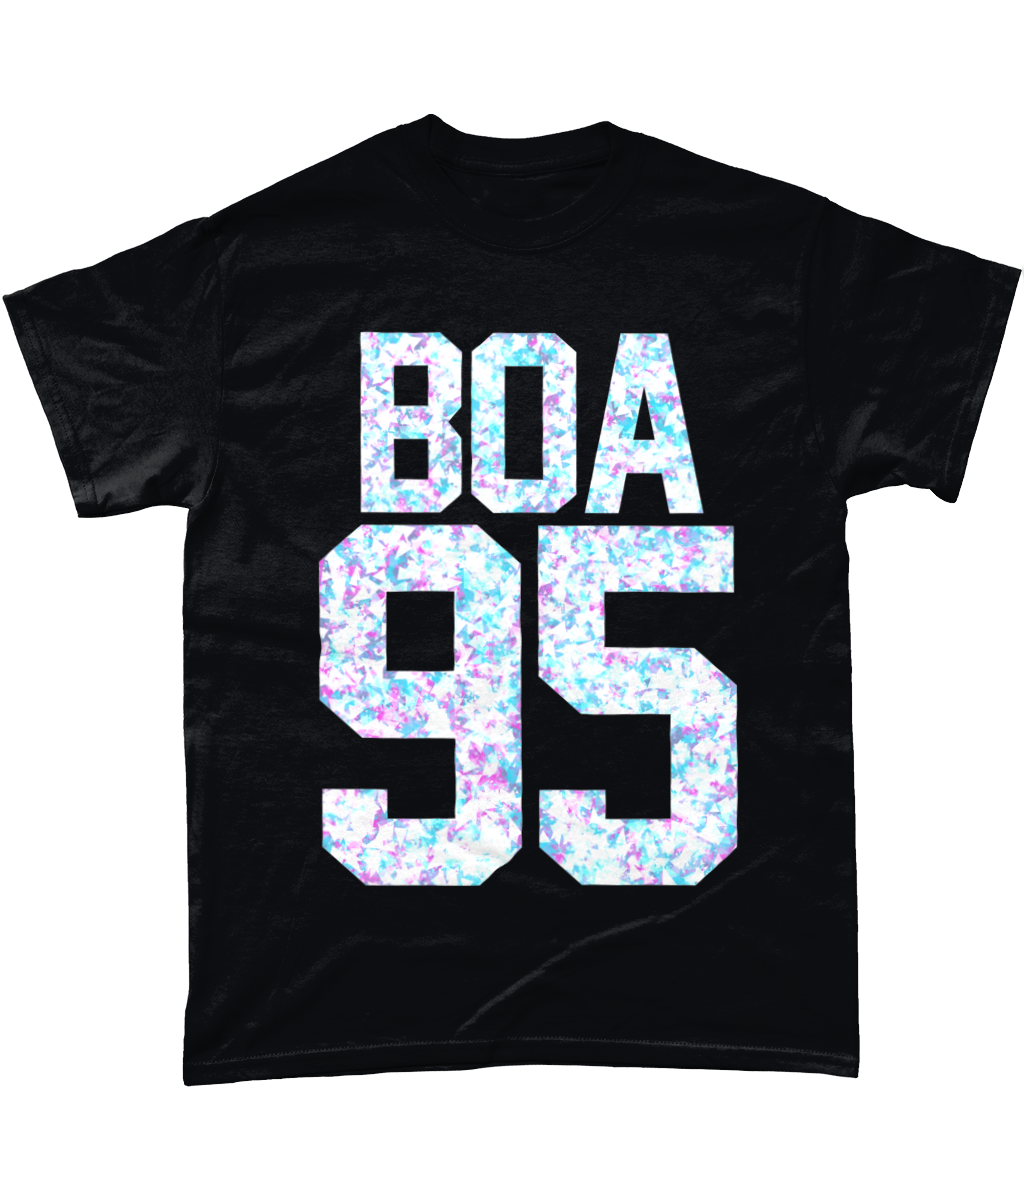 BOA - 95 T-shirt - SNATCHED MERCH